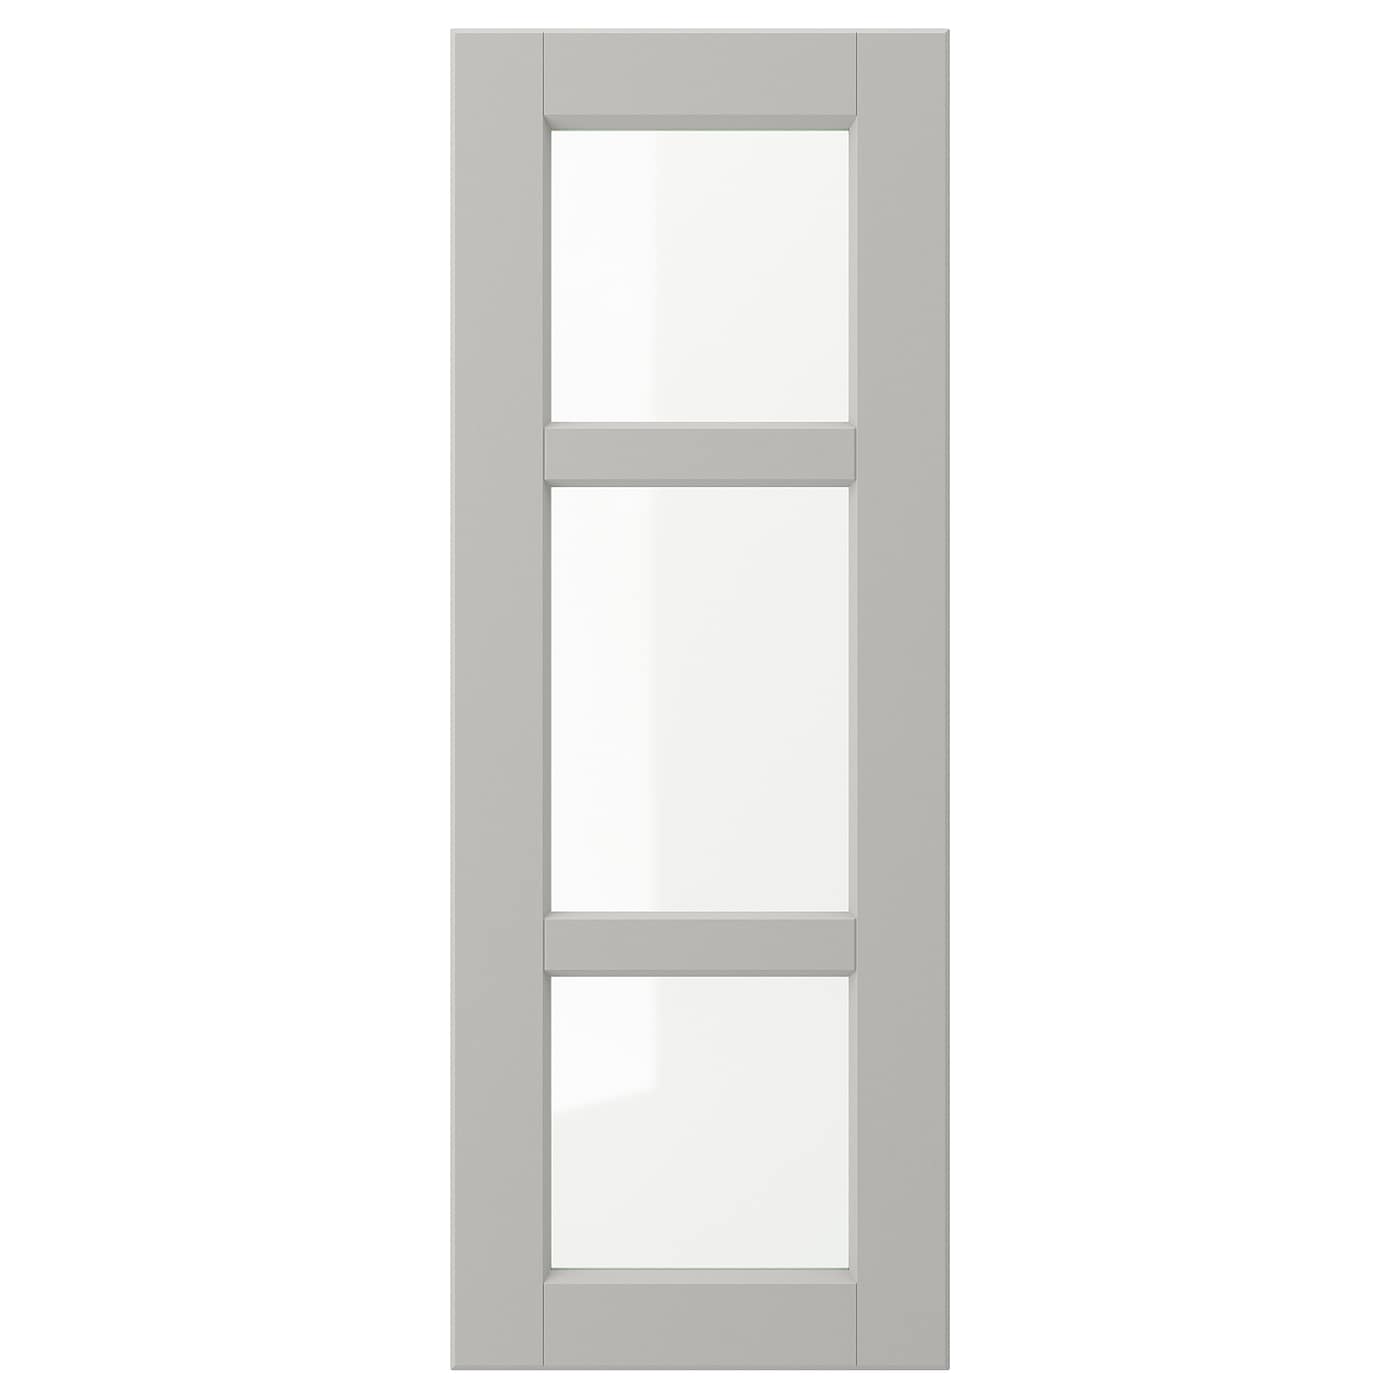 Дверца со стеклом - IKEA LERHYTTAN, 80х30 см, светло-серый, ЛЕРХЮТТАН ИКЕА